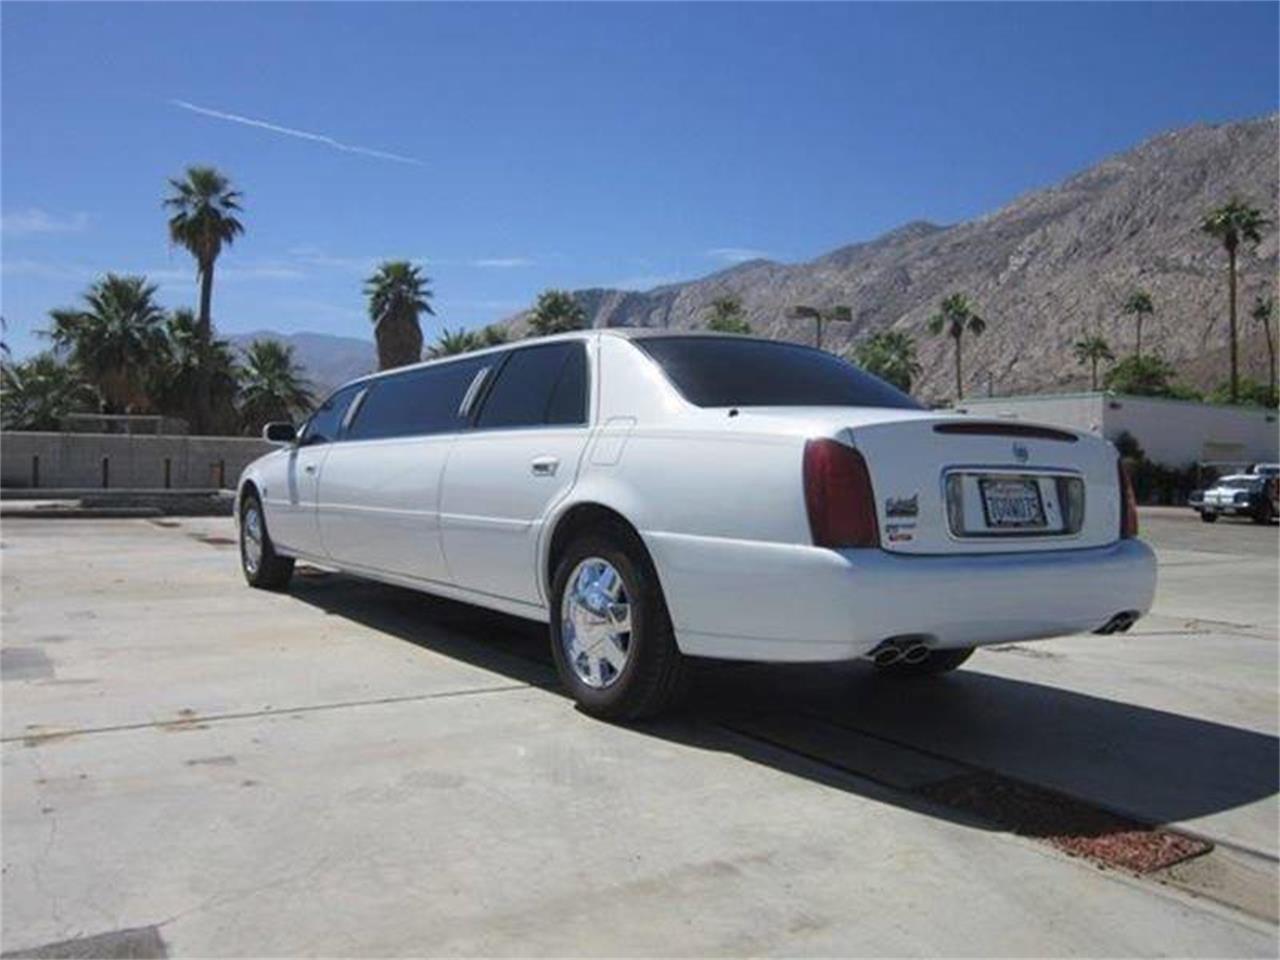 2004 Cadillac DTS for Sale | ClassicCars.com | CC-1168960